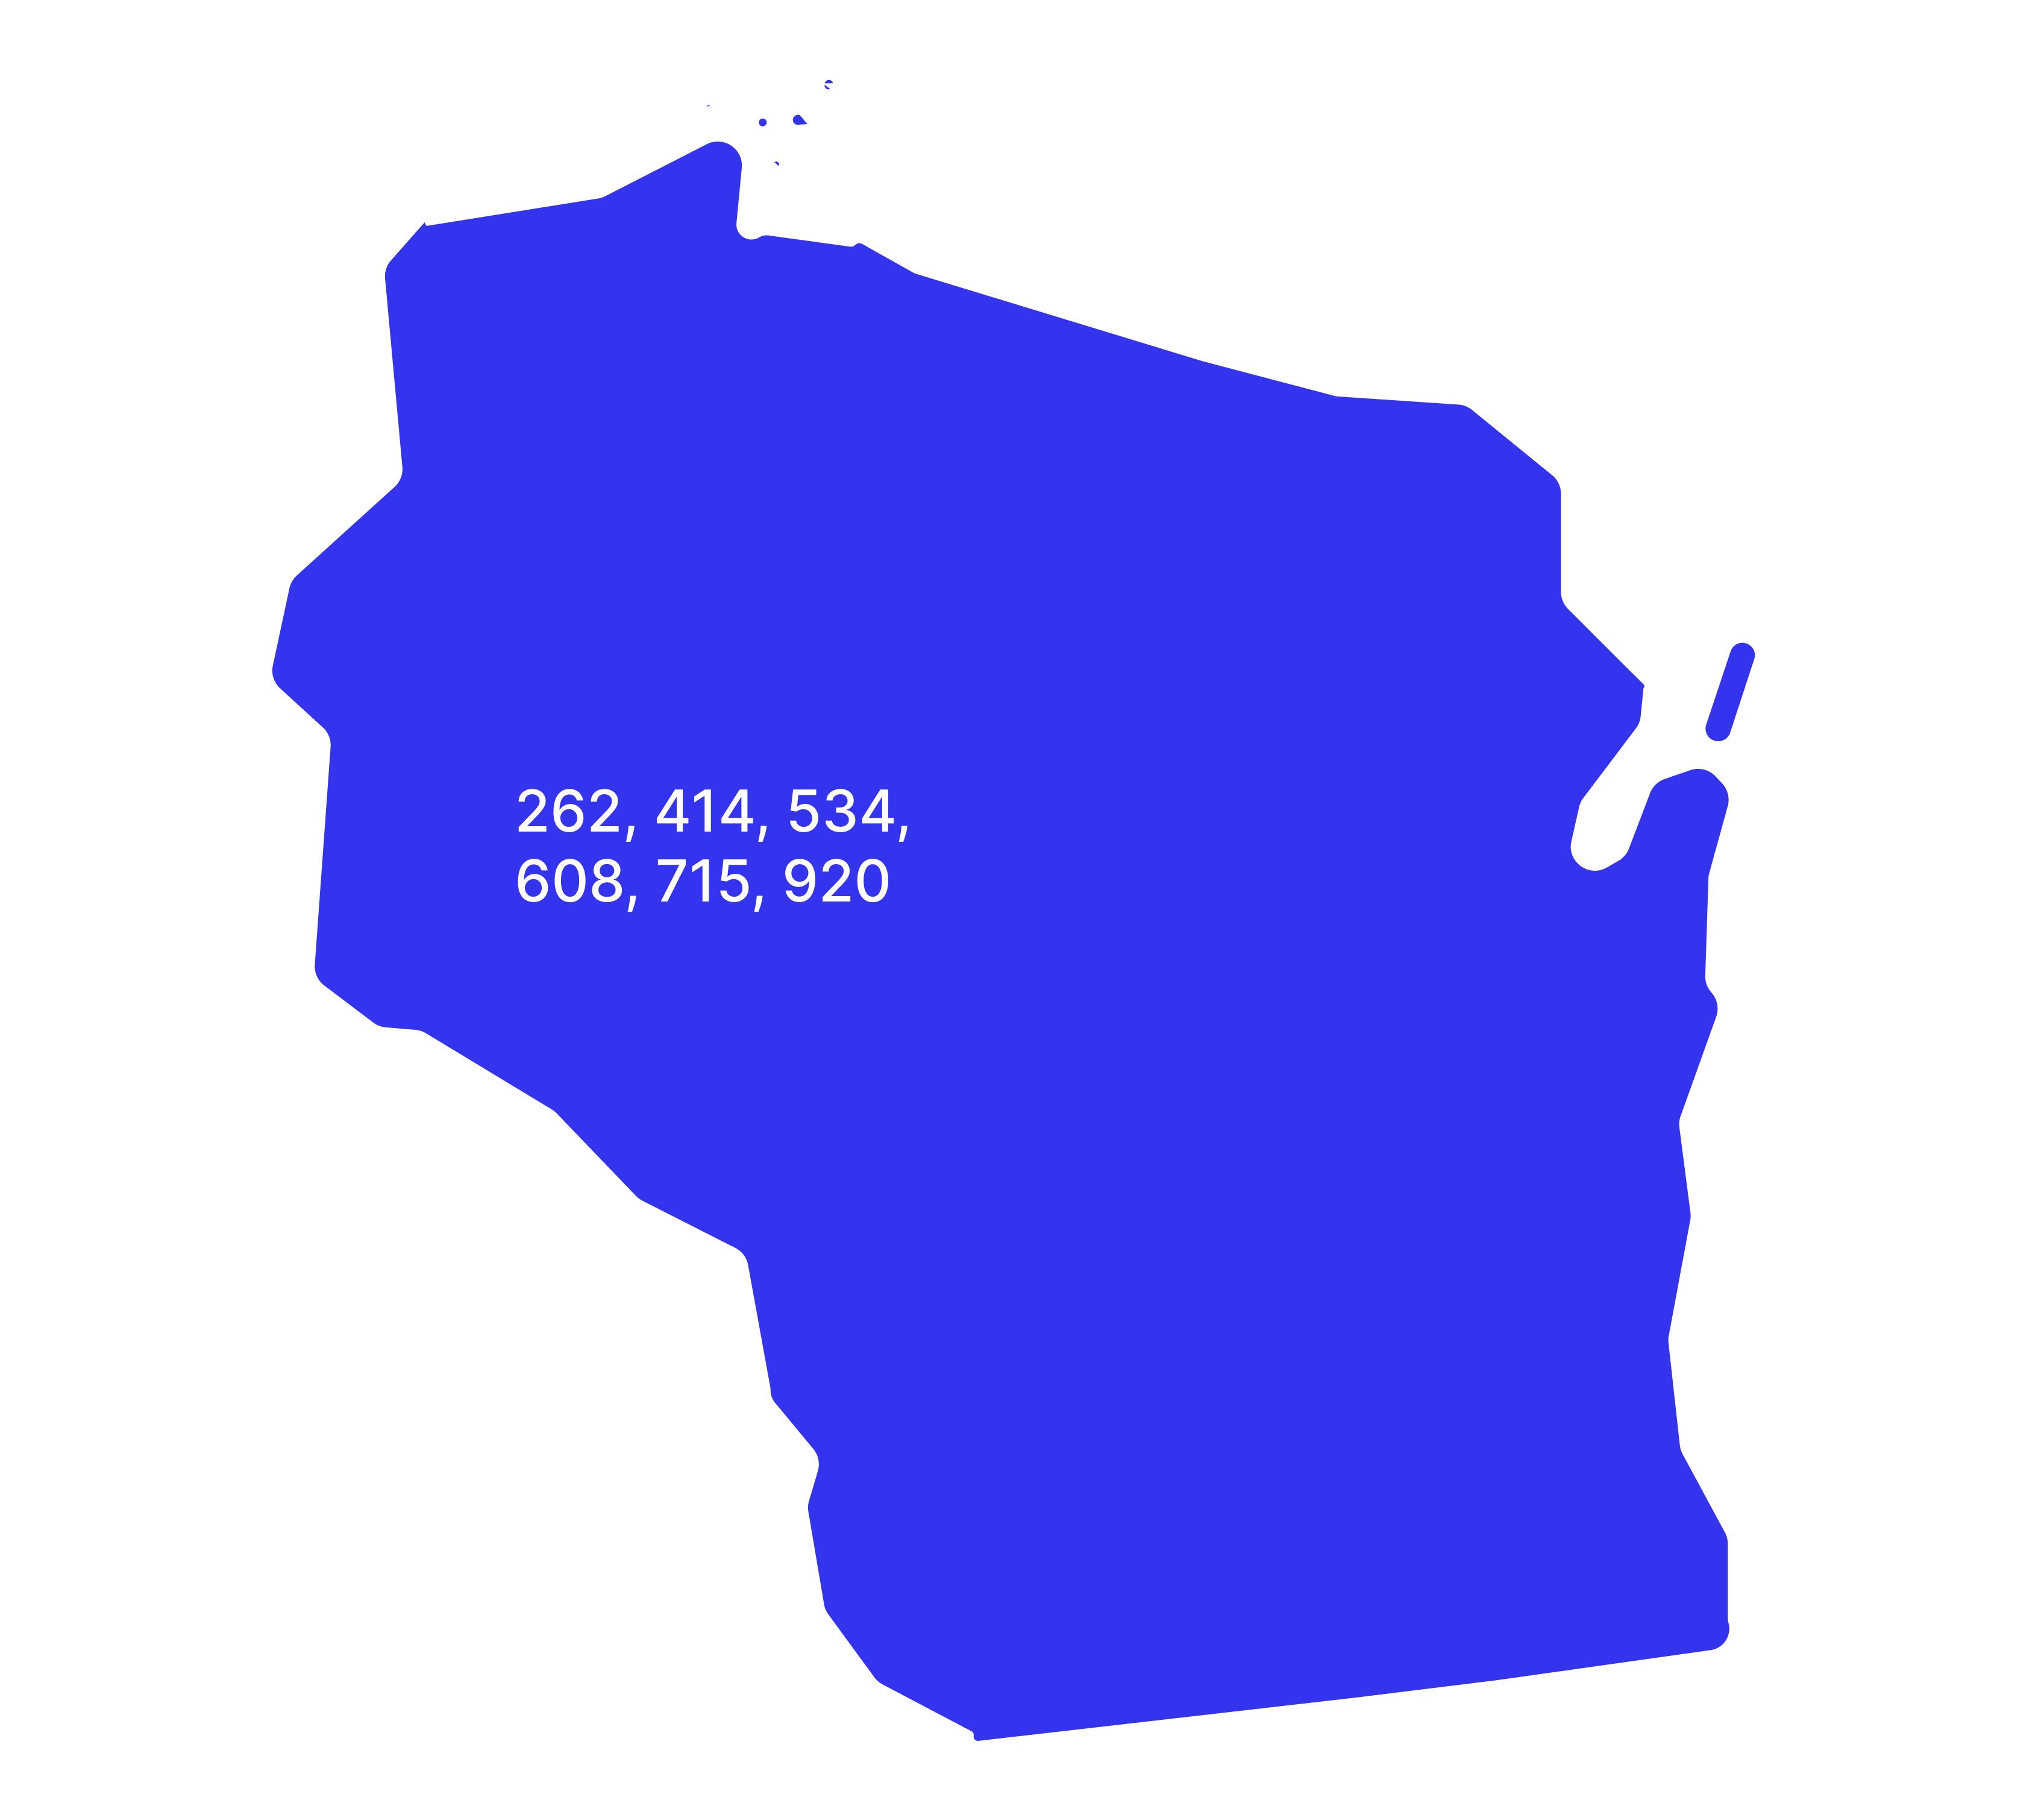 Wisconsin phone numbers